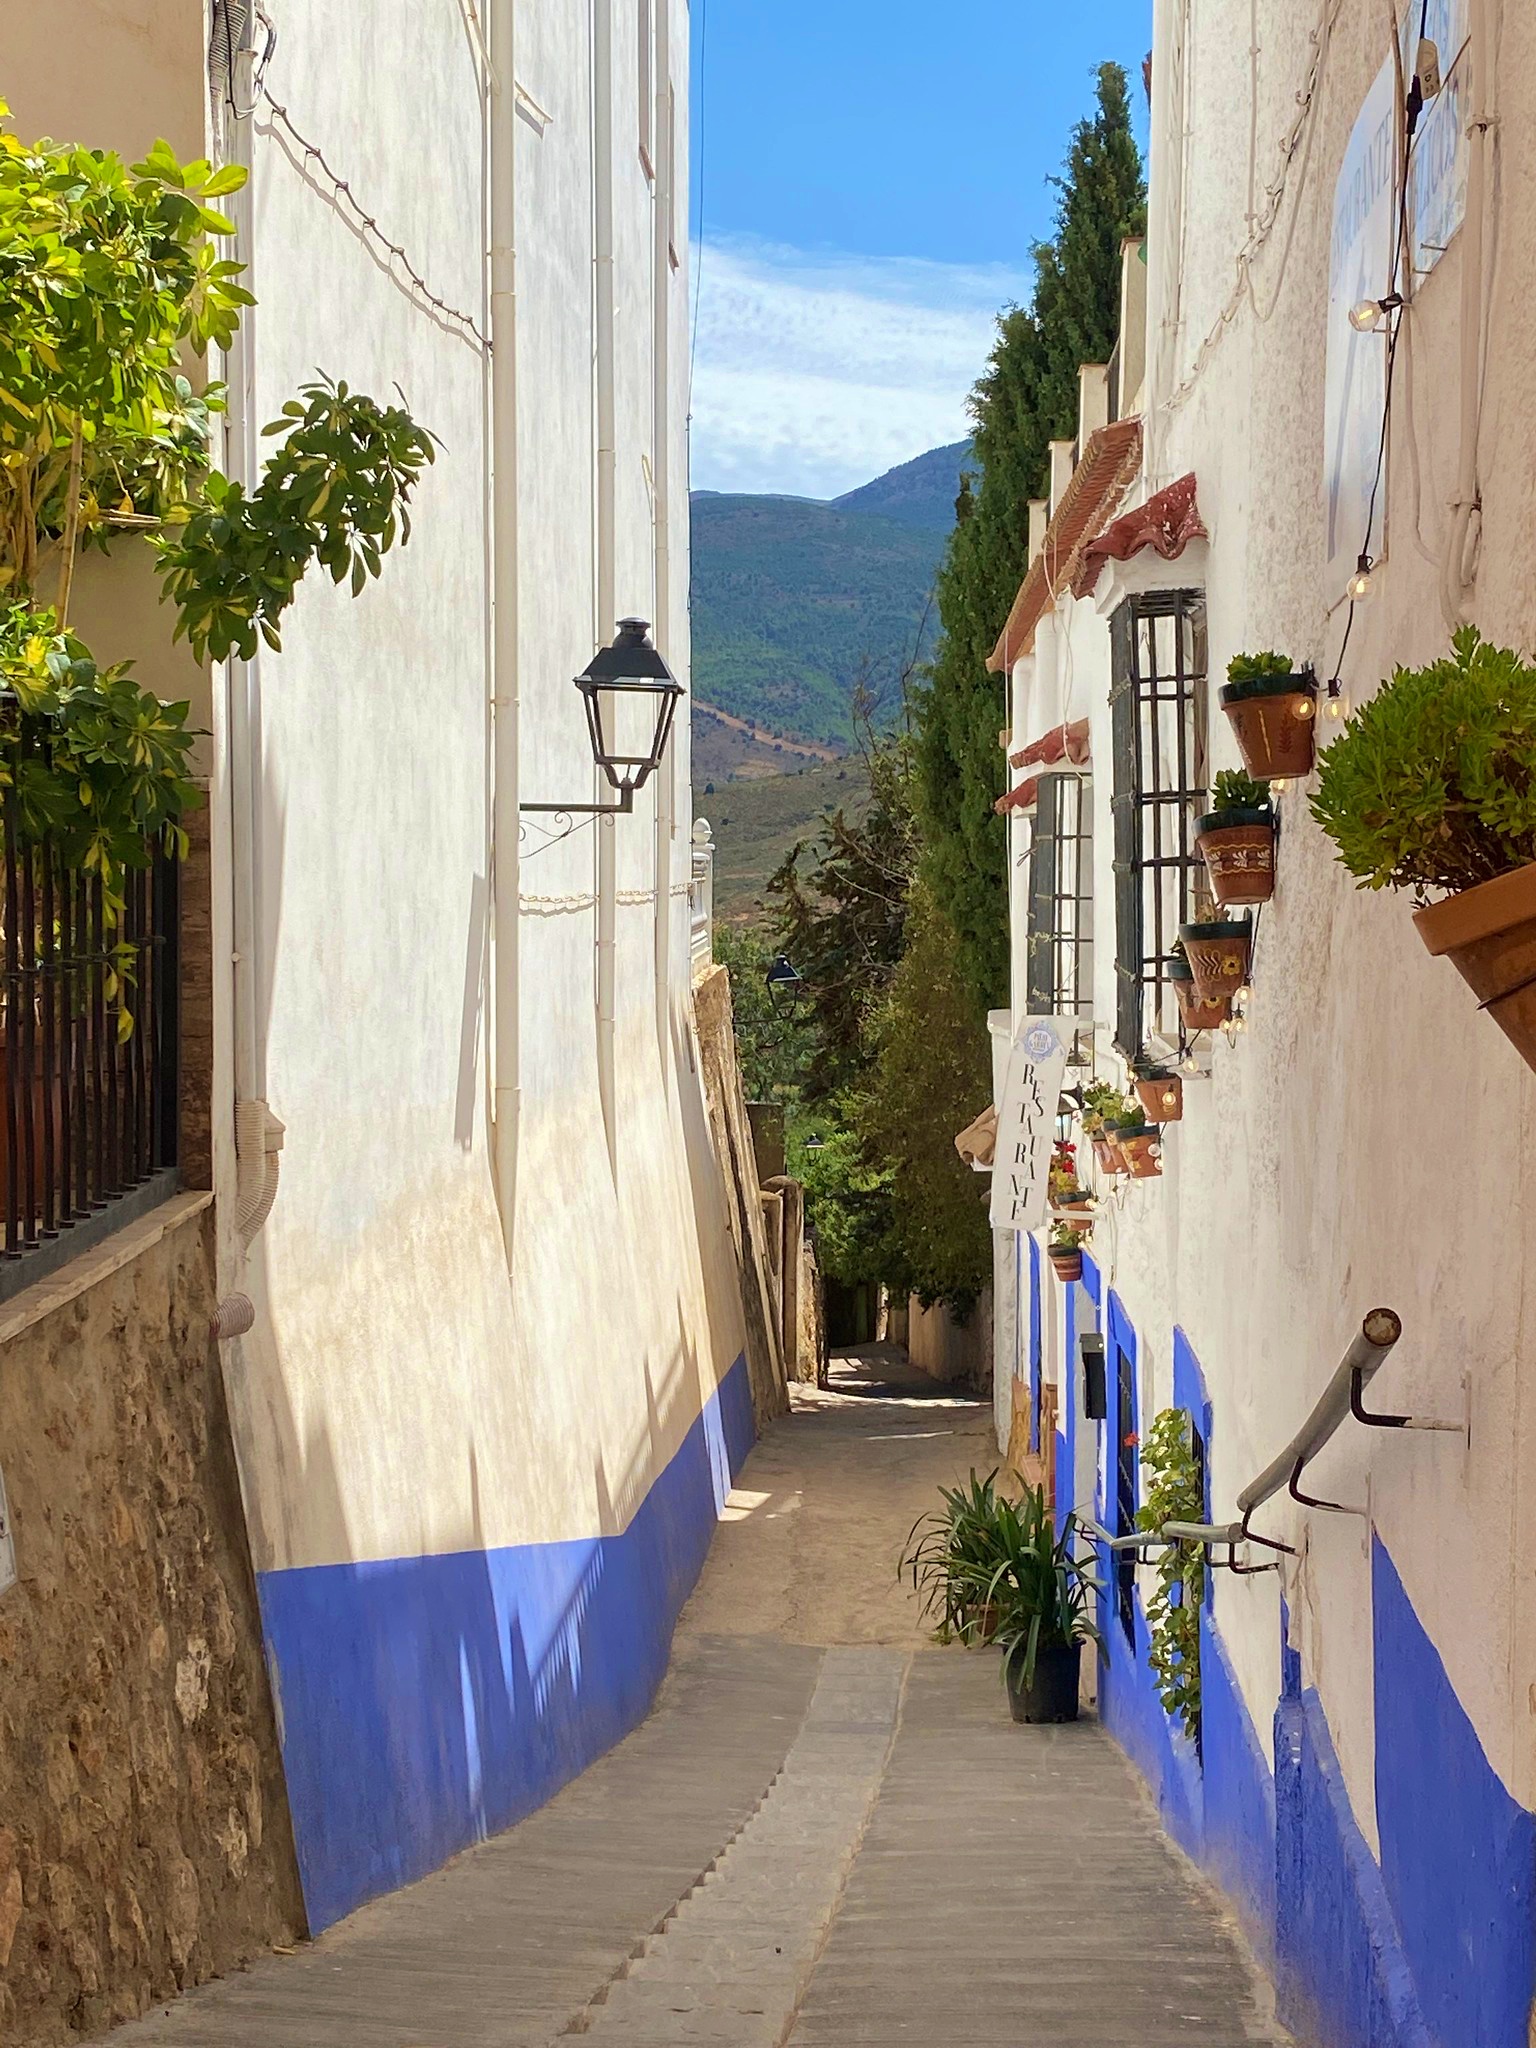 Calle con fachadas azules y macetas